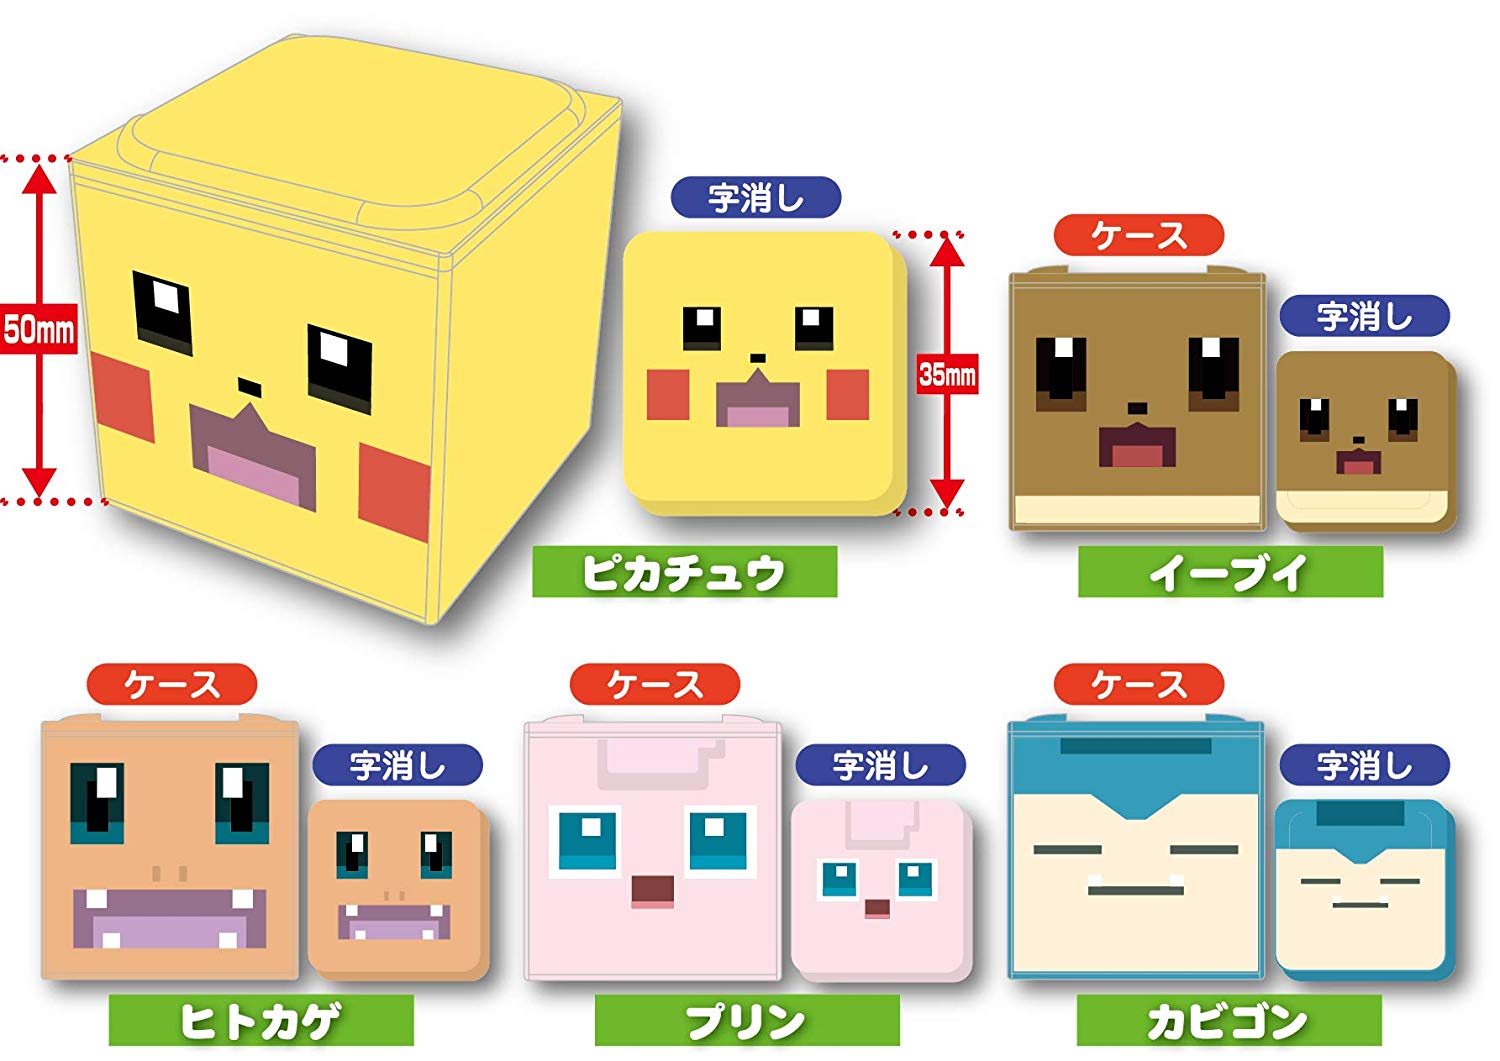 Takara Tomy Releasing Pokemon Quest Box The Gonintendo Archives Gonintendo